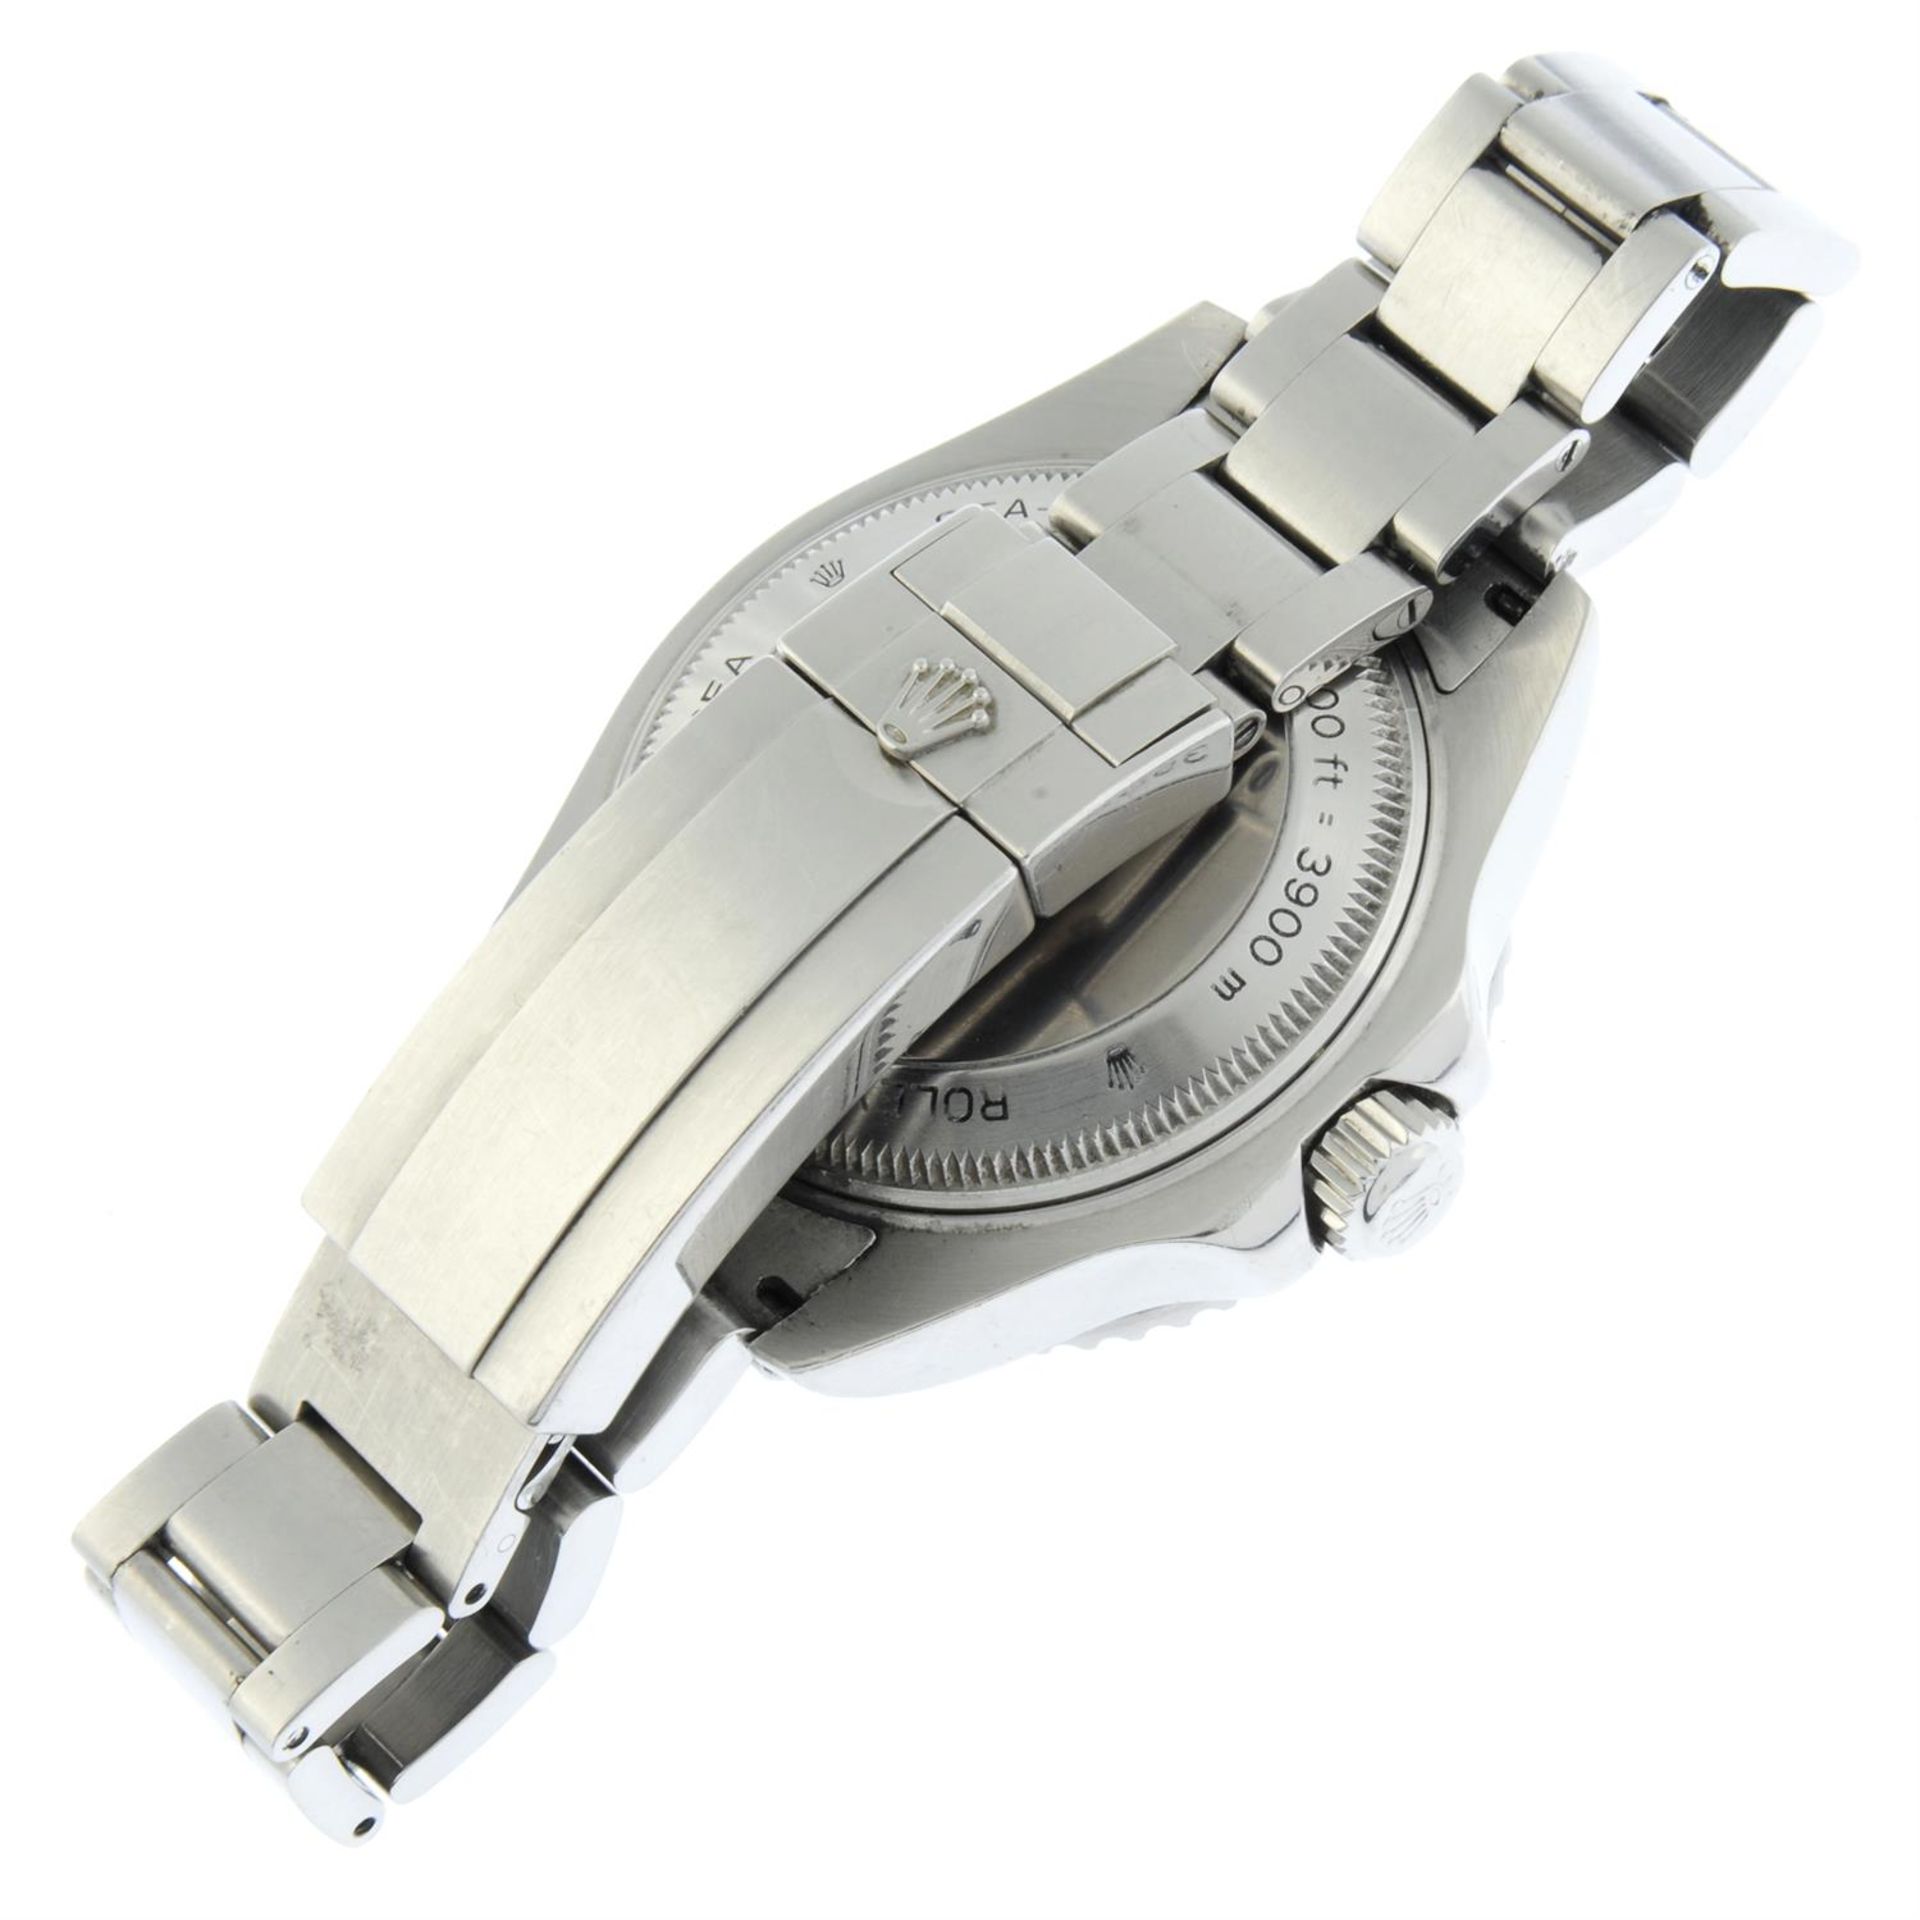 Rolex - an Oyster Perpetual Deepsea Sea-Dweller watch, 44mm. - Image 2 of 4